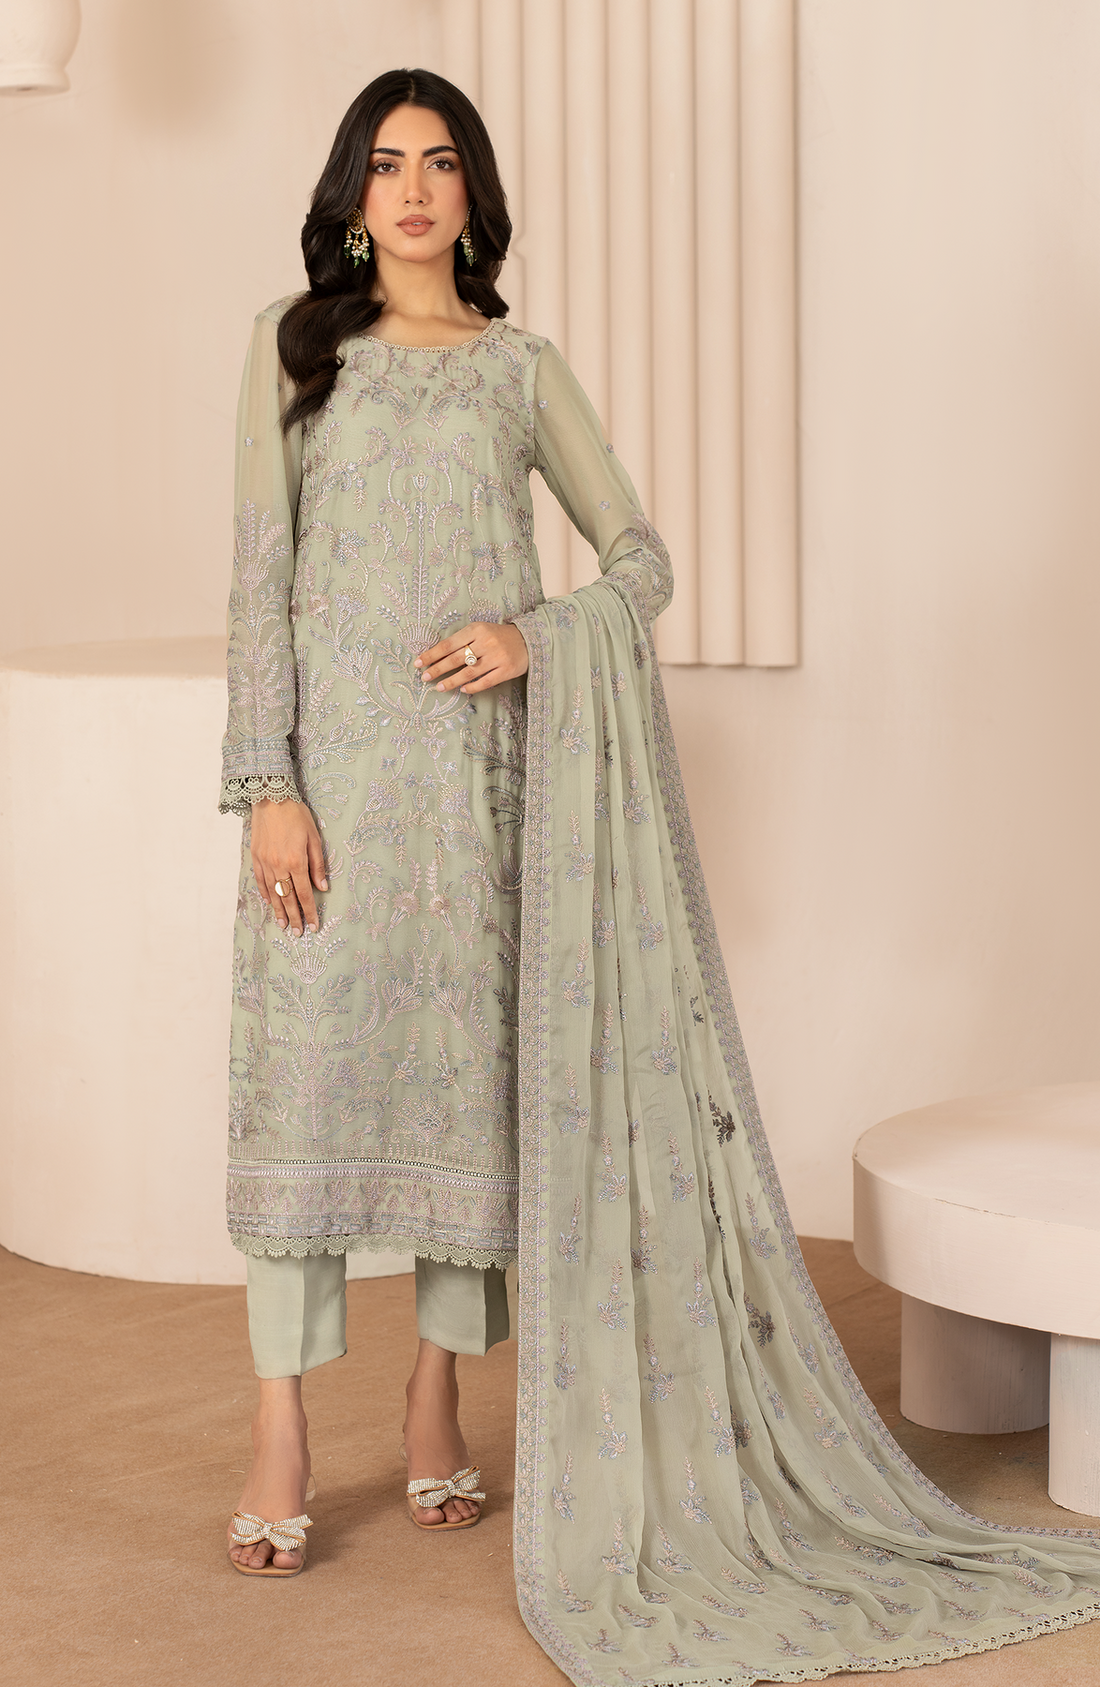 Zarif | Chiffon Edit  | ZL 04 AFSA - Khanumjan  Pakistani Clothes and Designer Dresses in UK, USA 